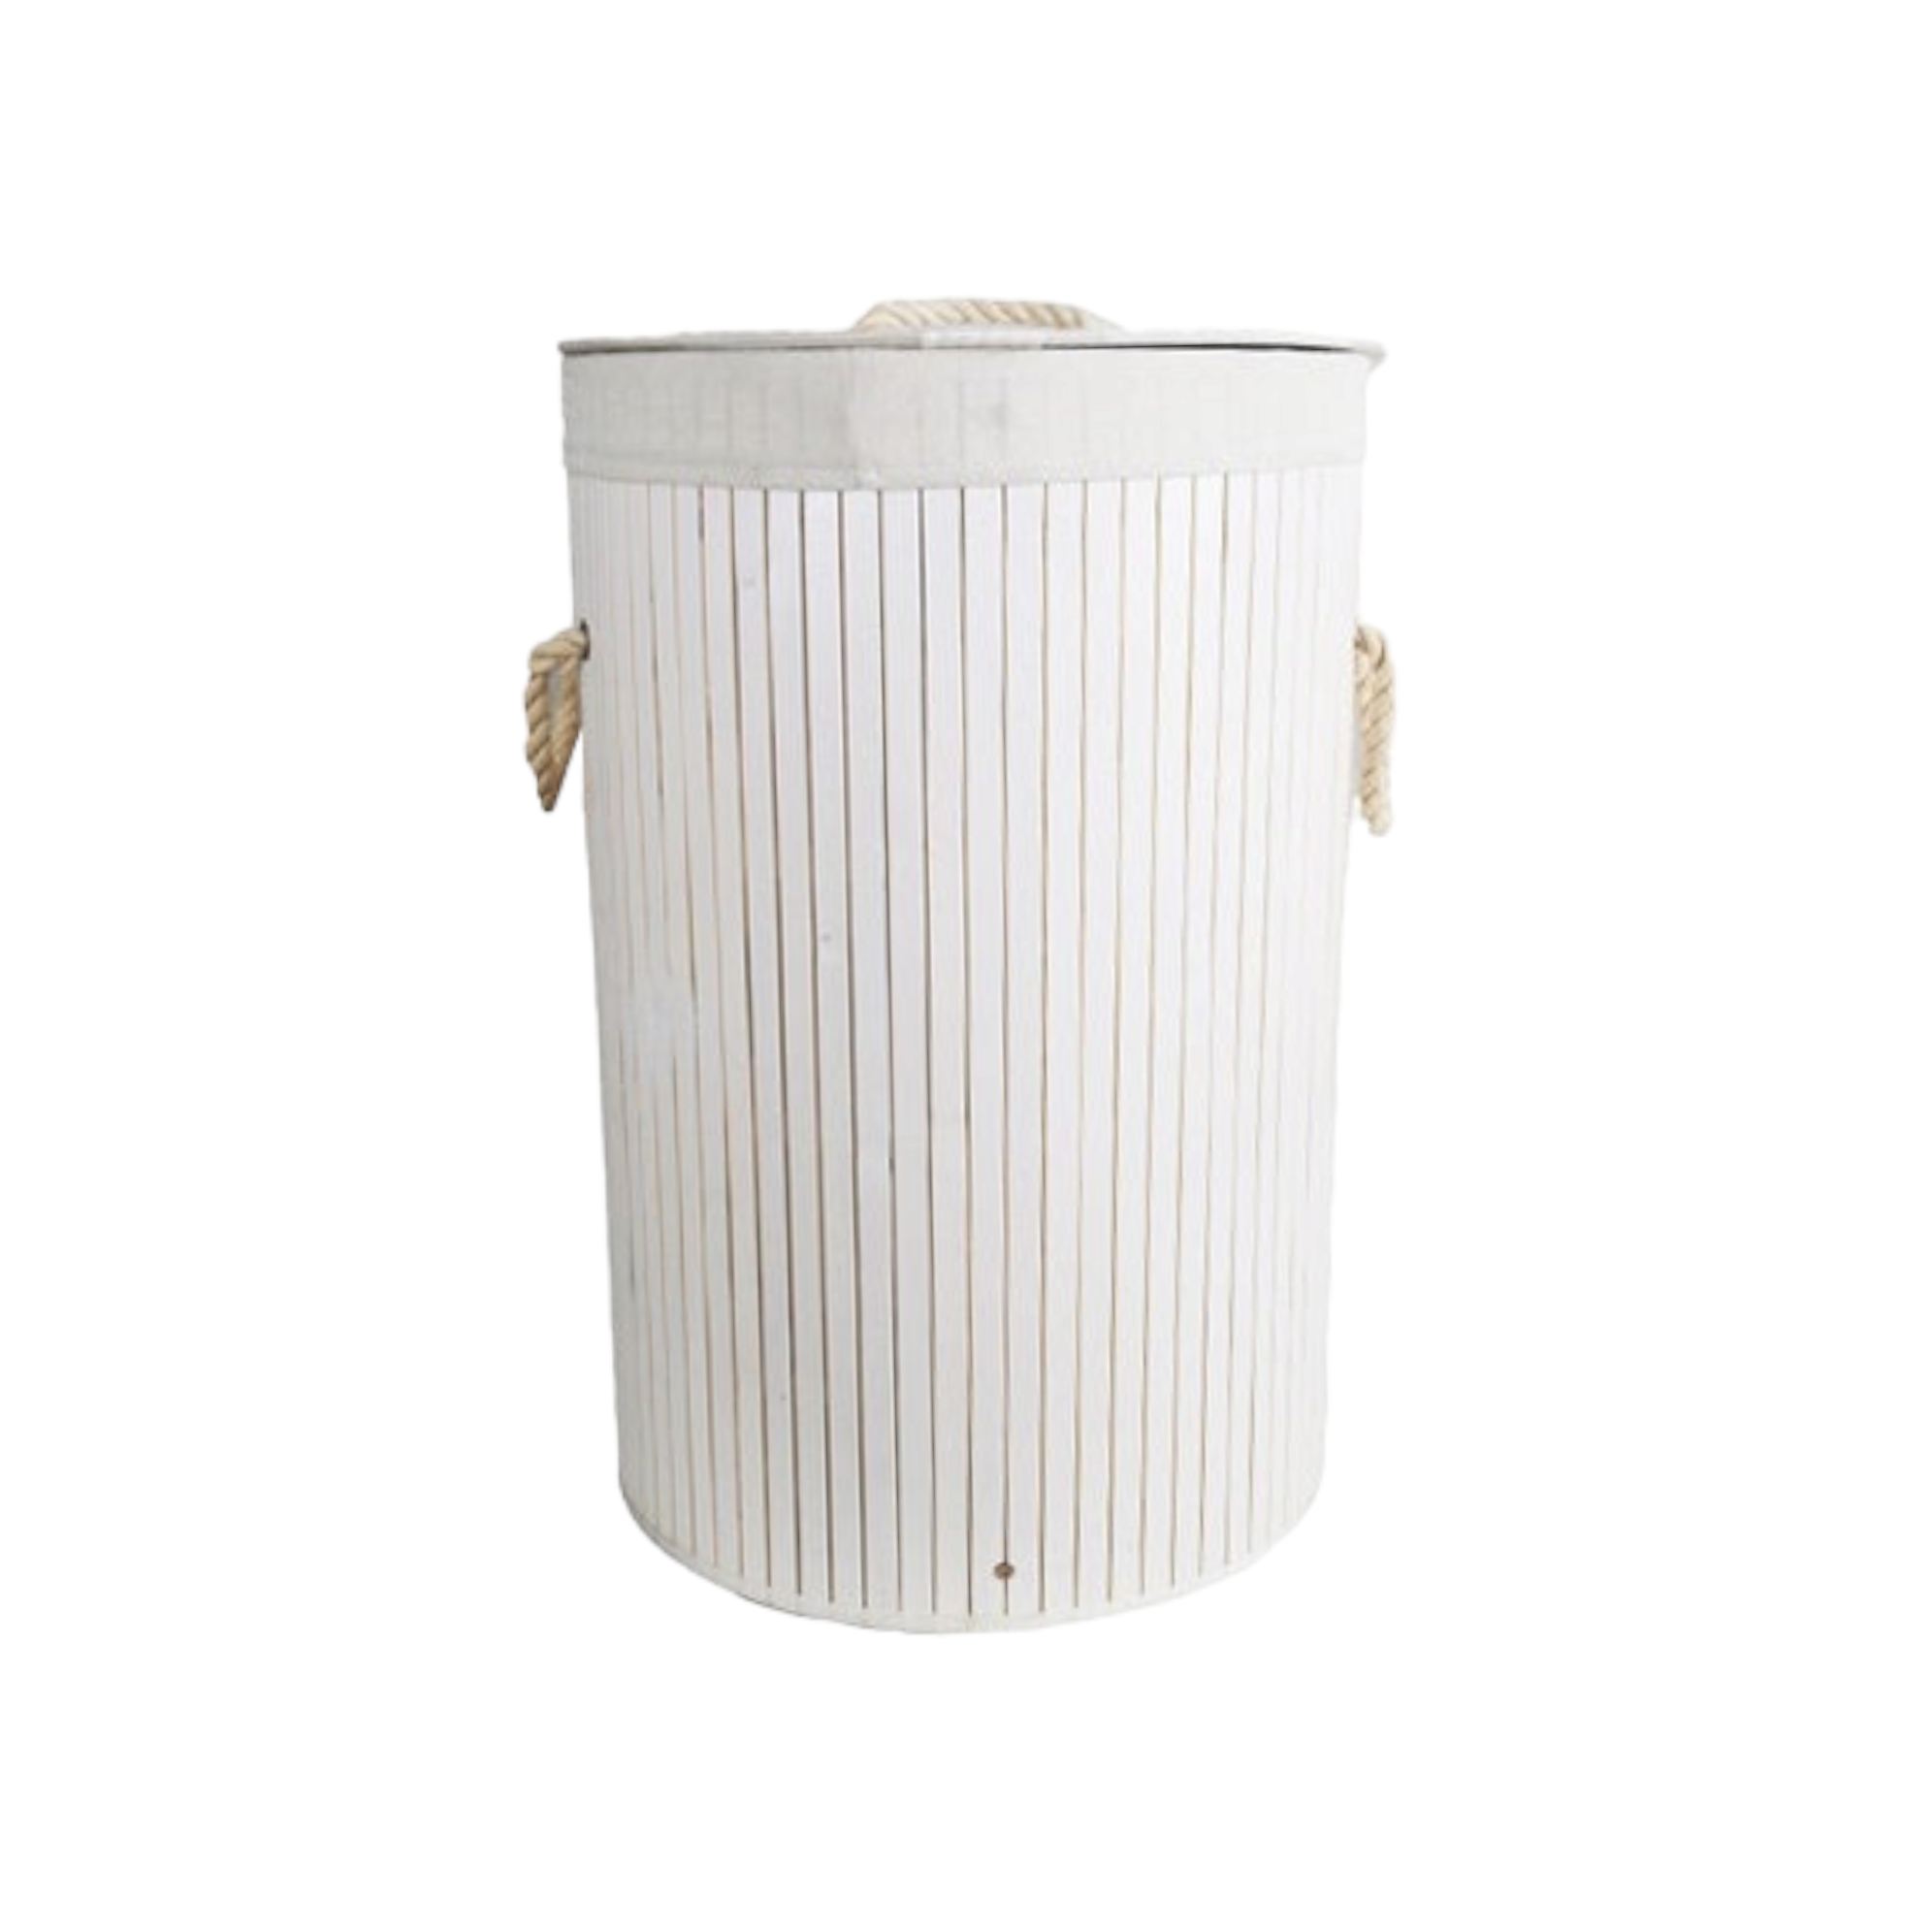 Aqua Bamboo Foldable Laundry Linen Bin Basket Round White 15694